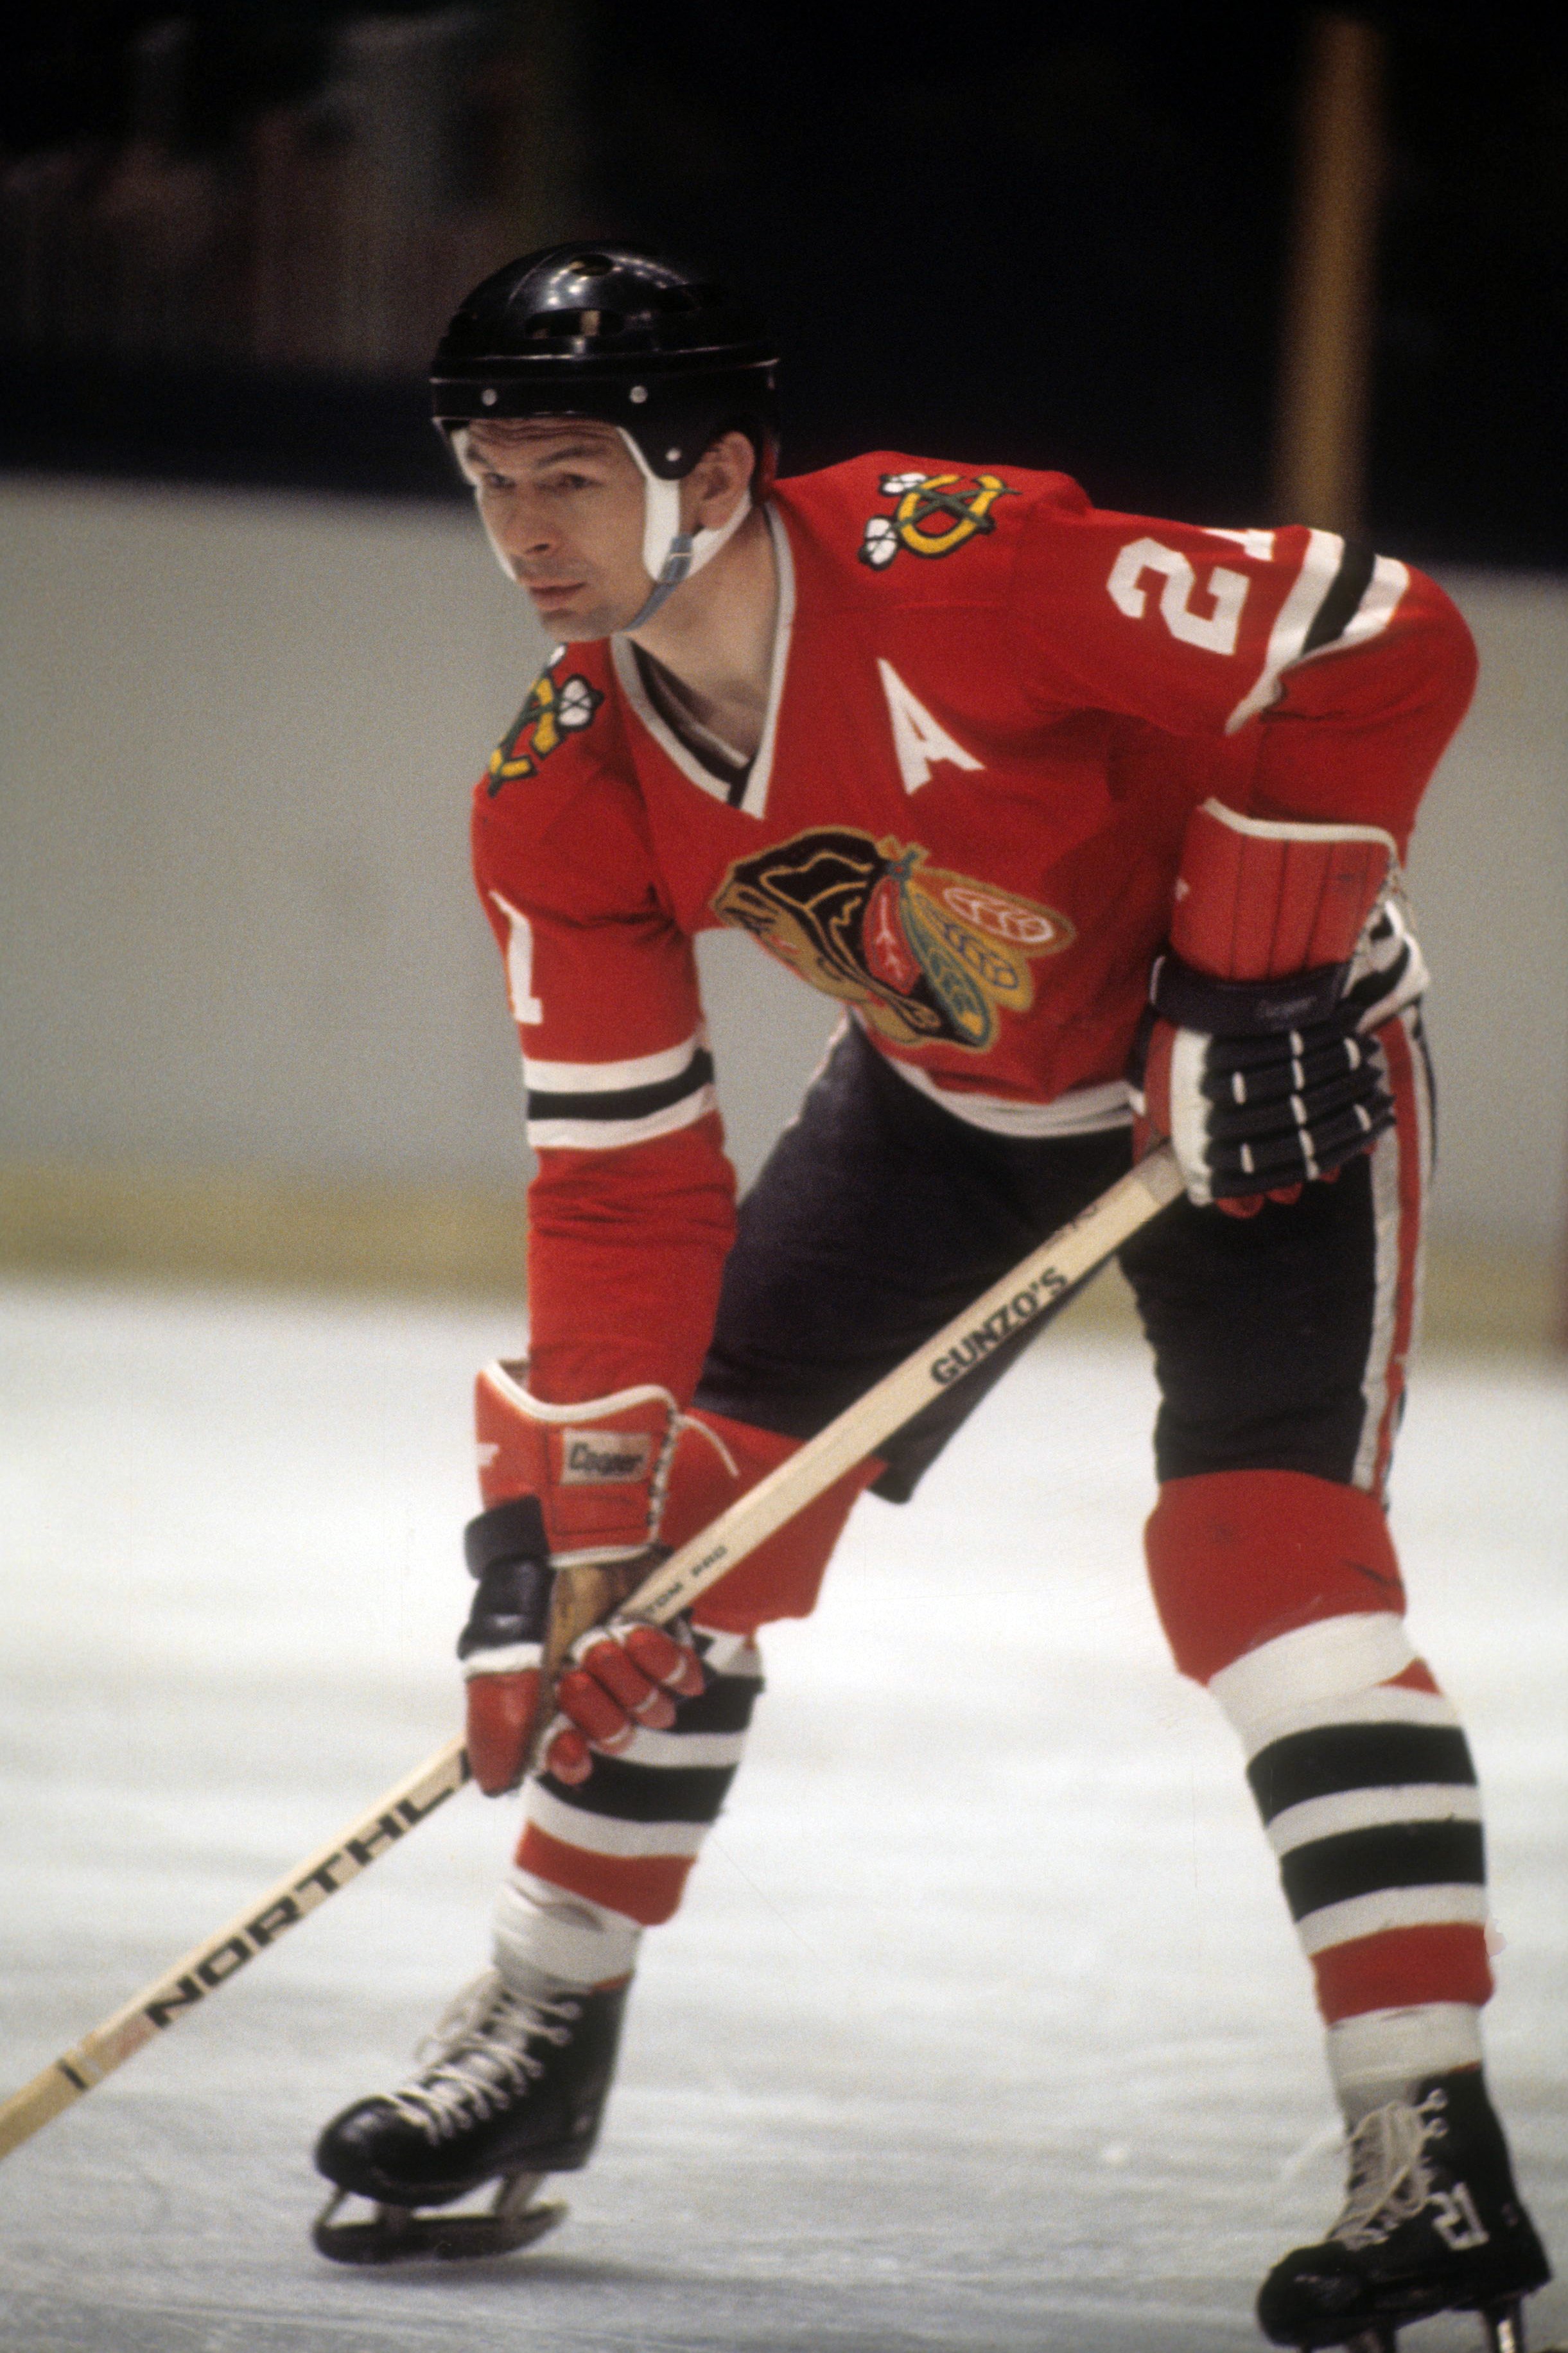 Stan Mikita, Canadian ice-hockey player